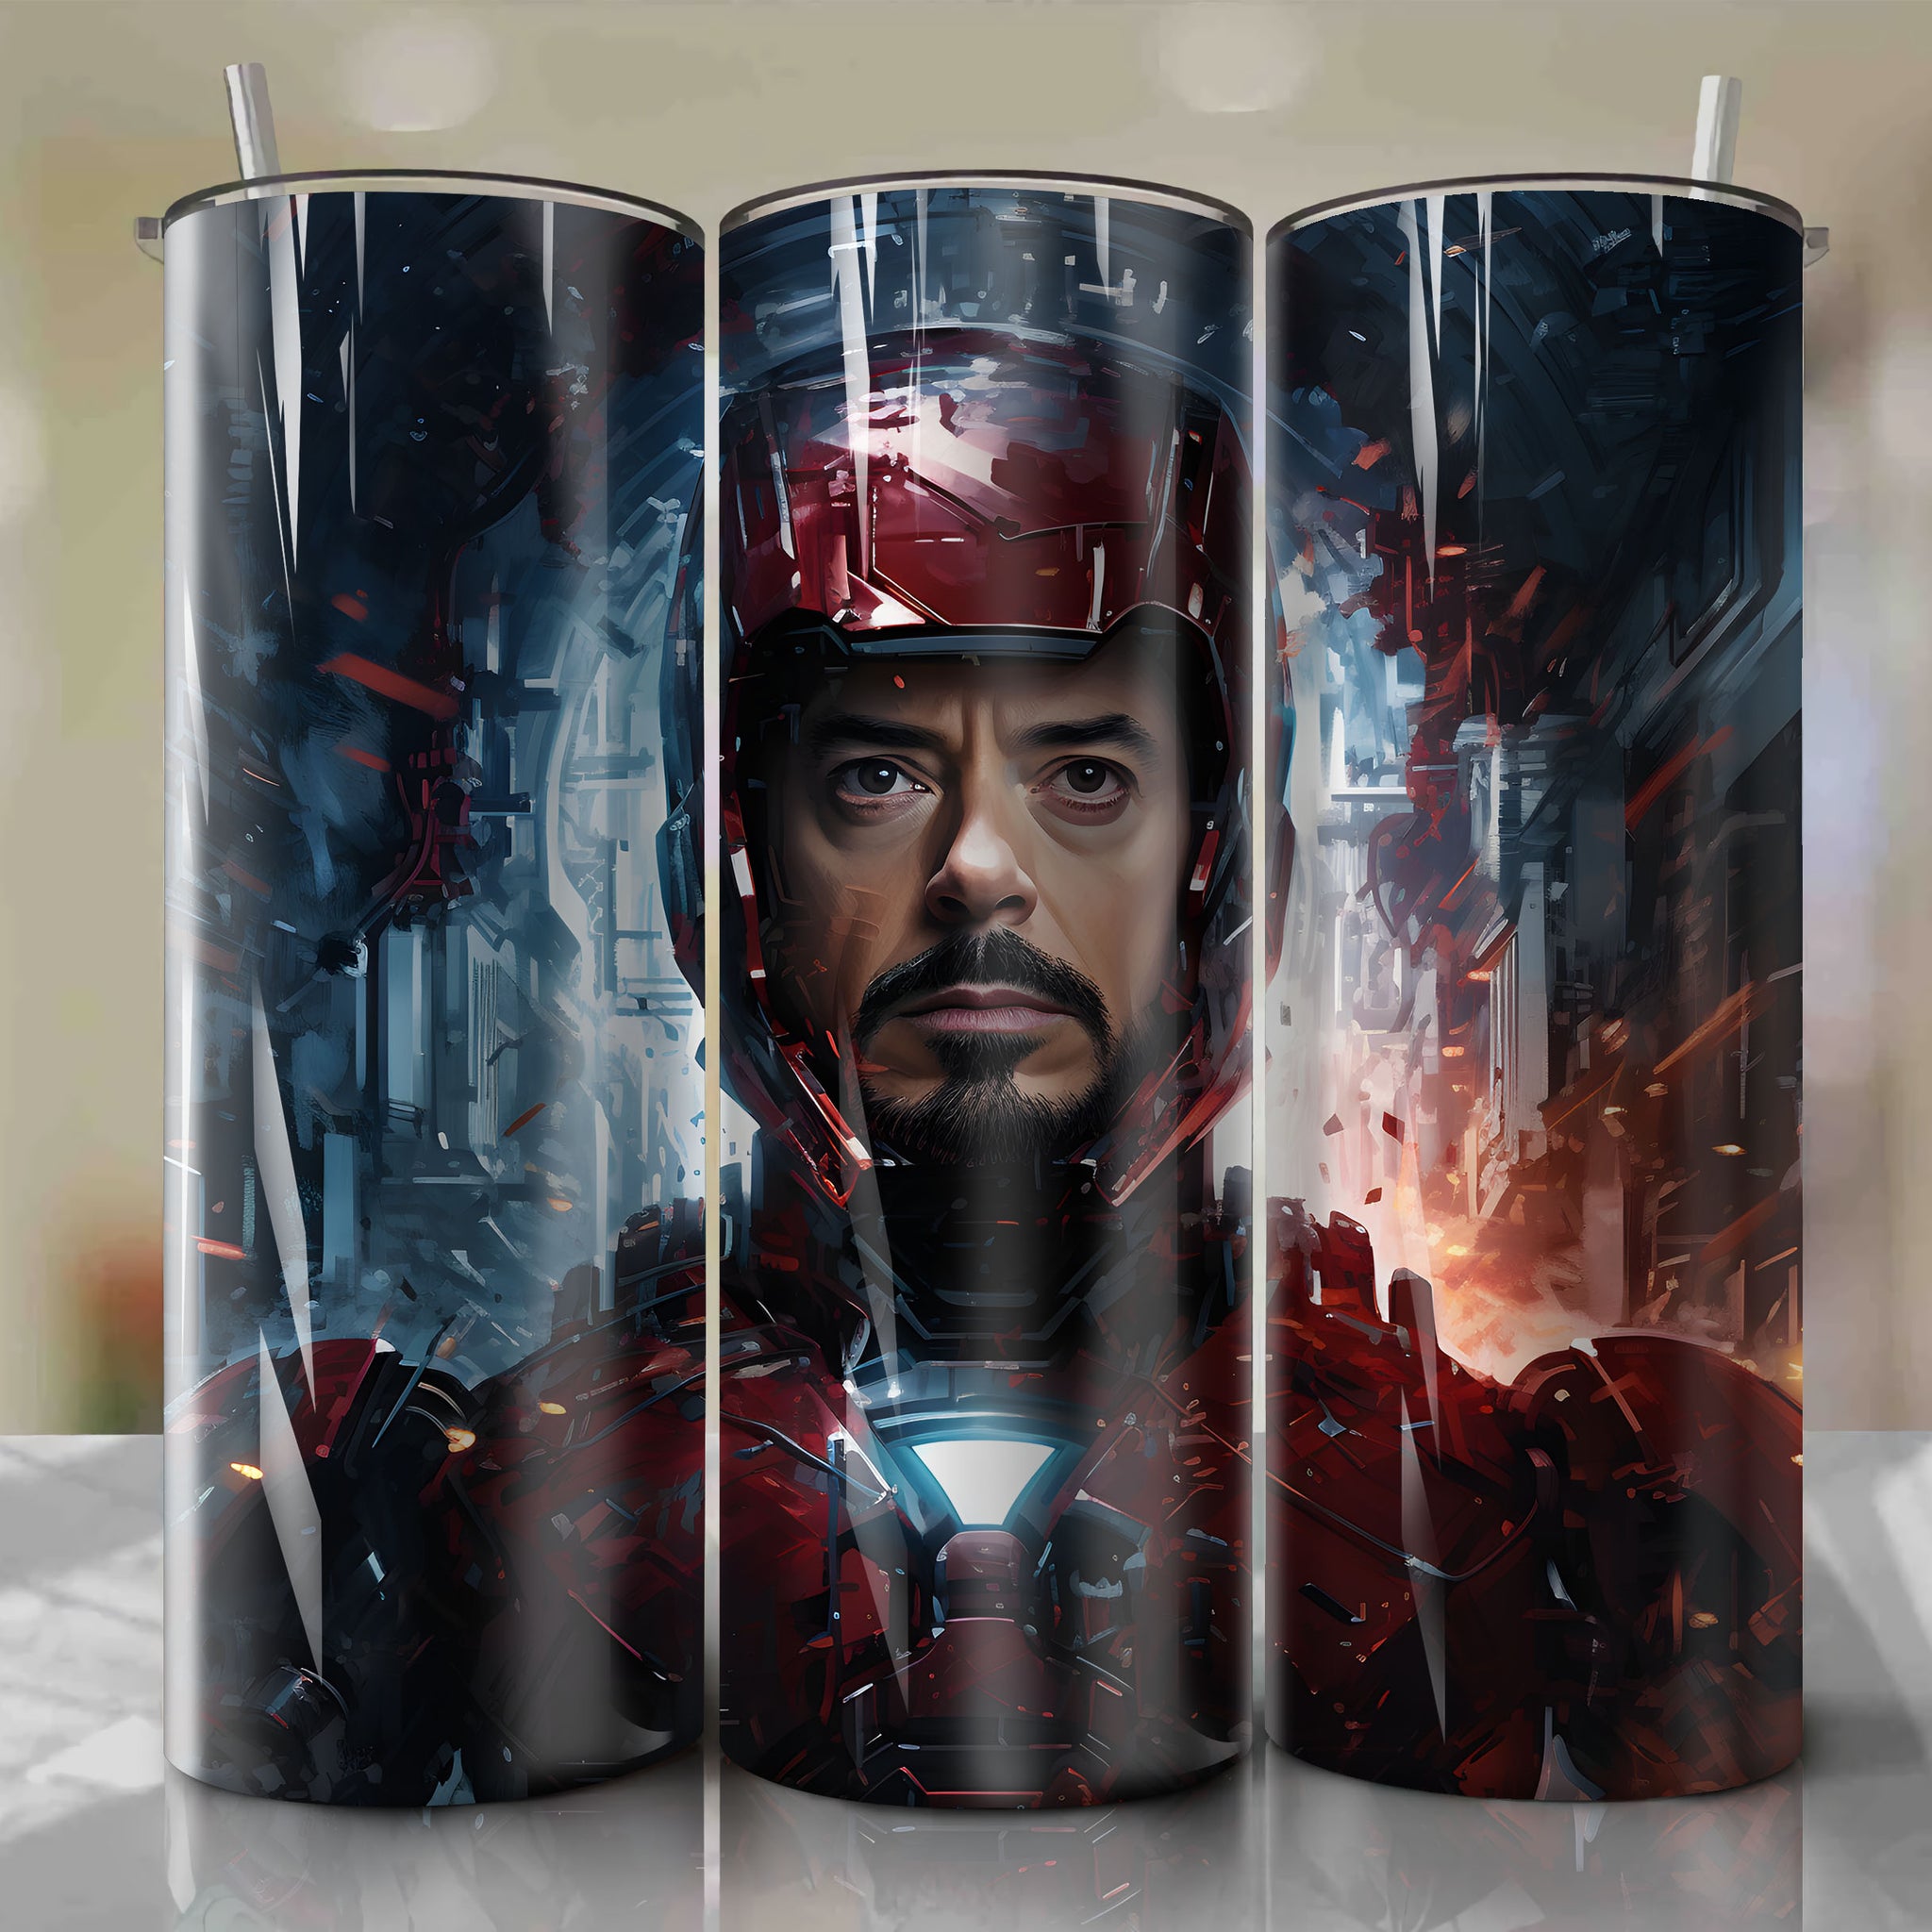 20 Oz Tumbler Wrap - Iron Man: A Dynamic Depiction of Tony Stark's Technological Brilliance
